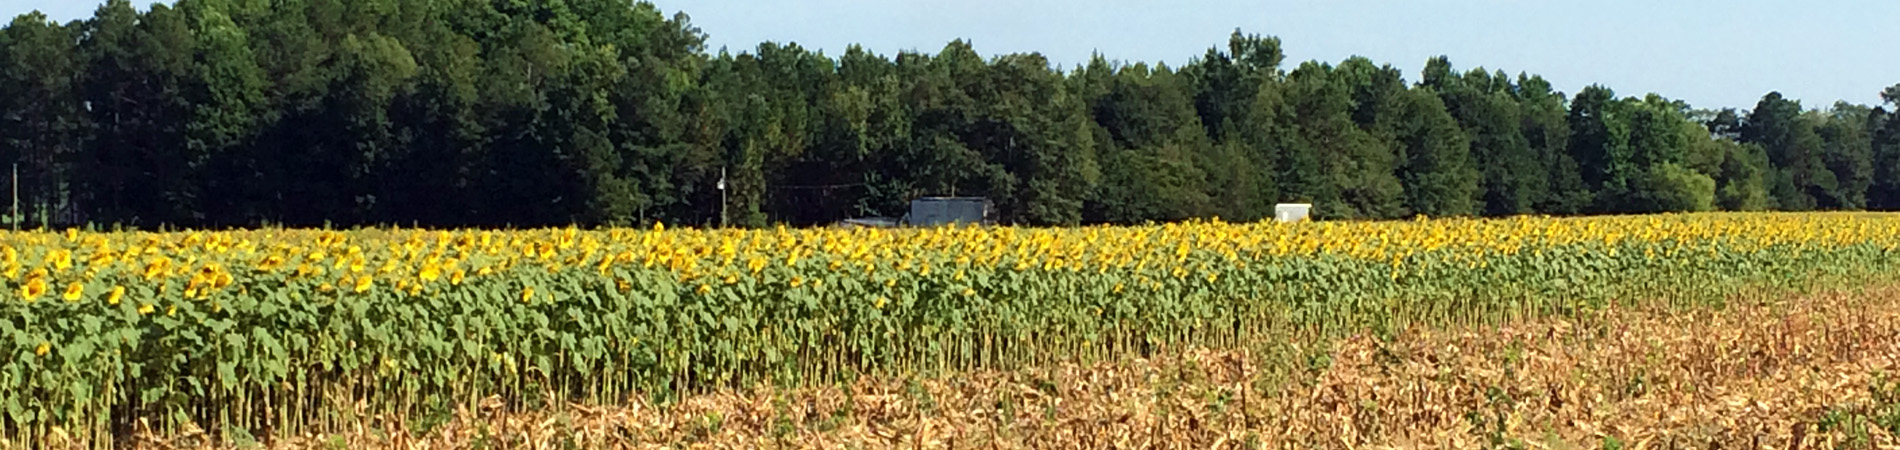 Sunflowers in Dove Field